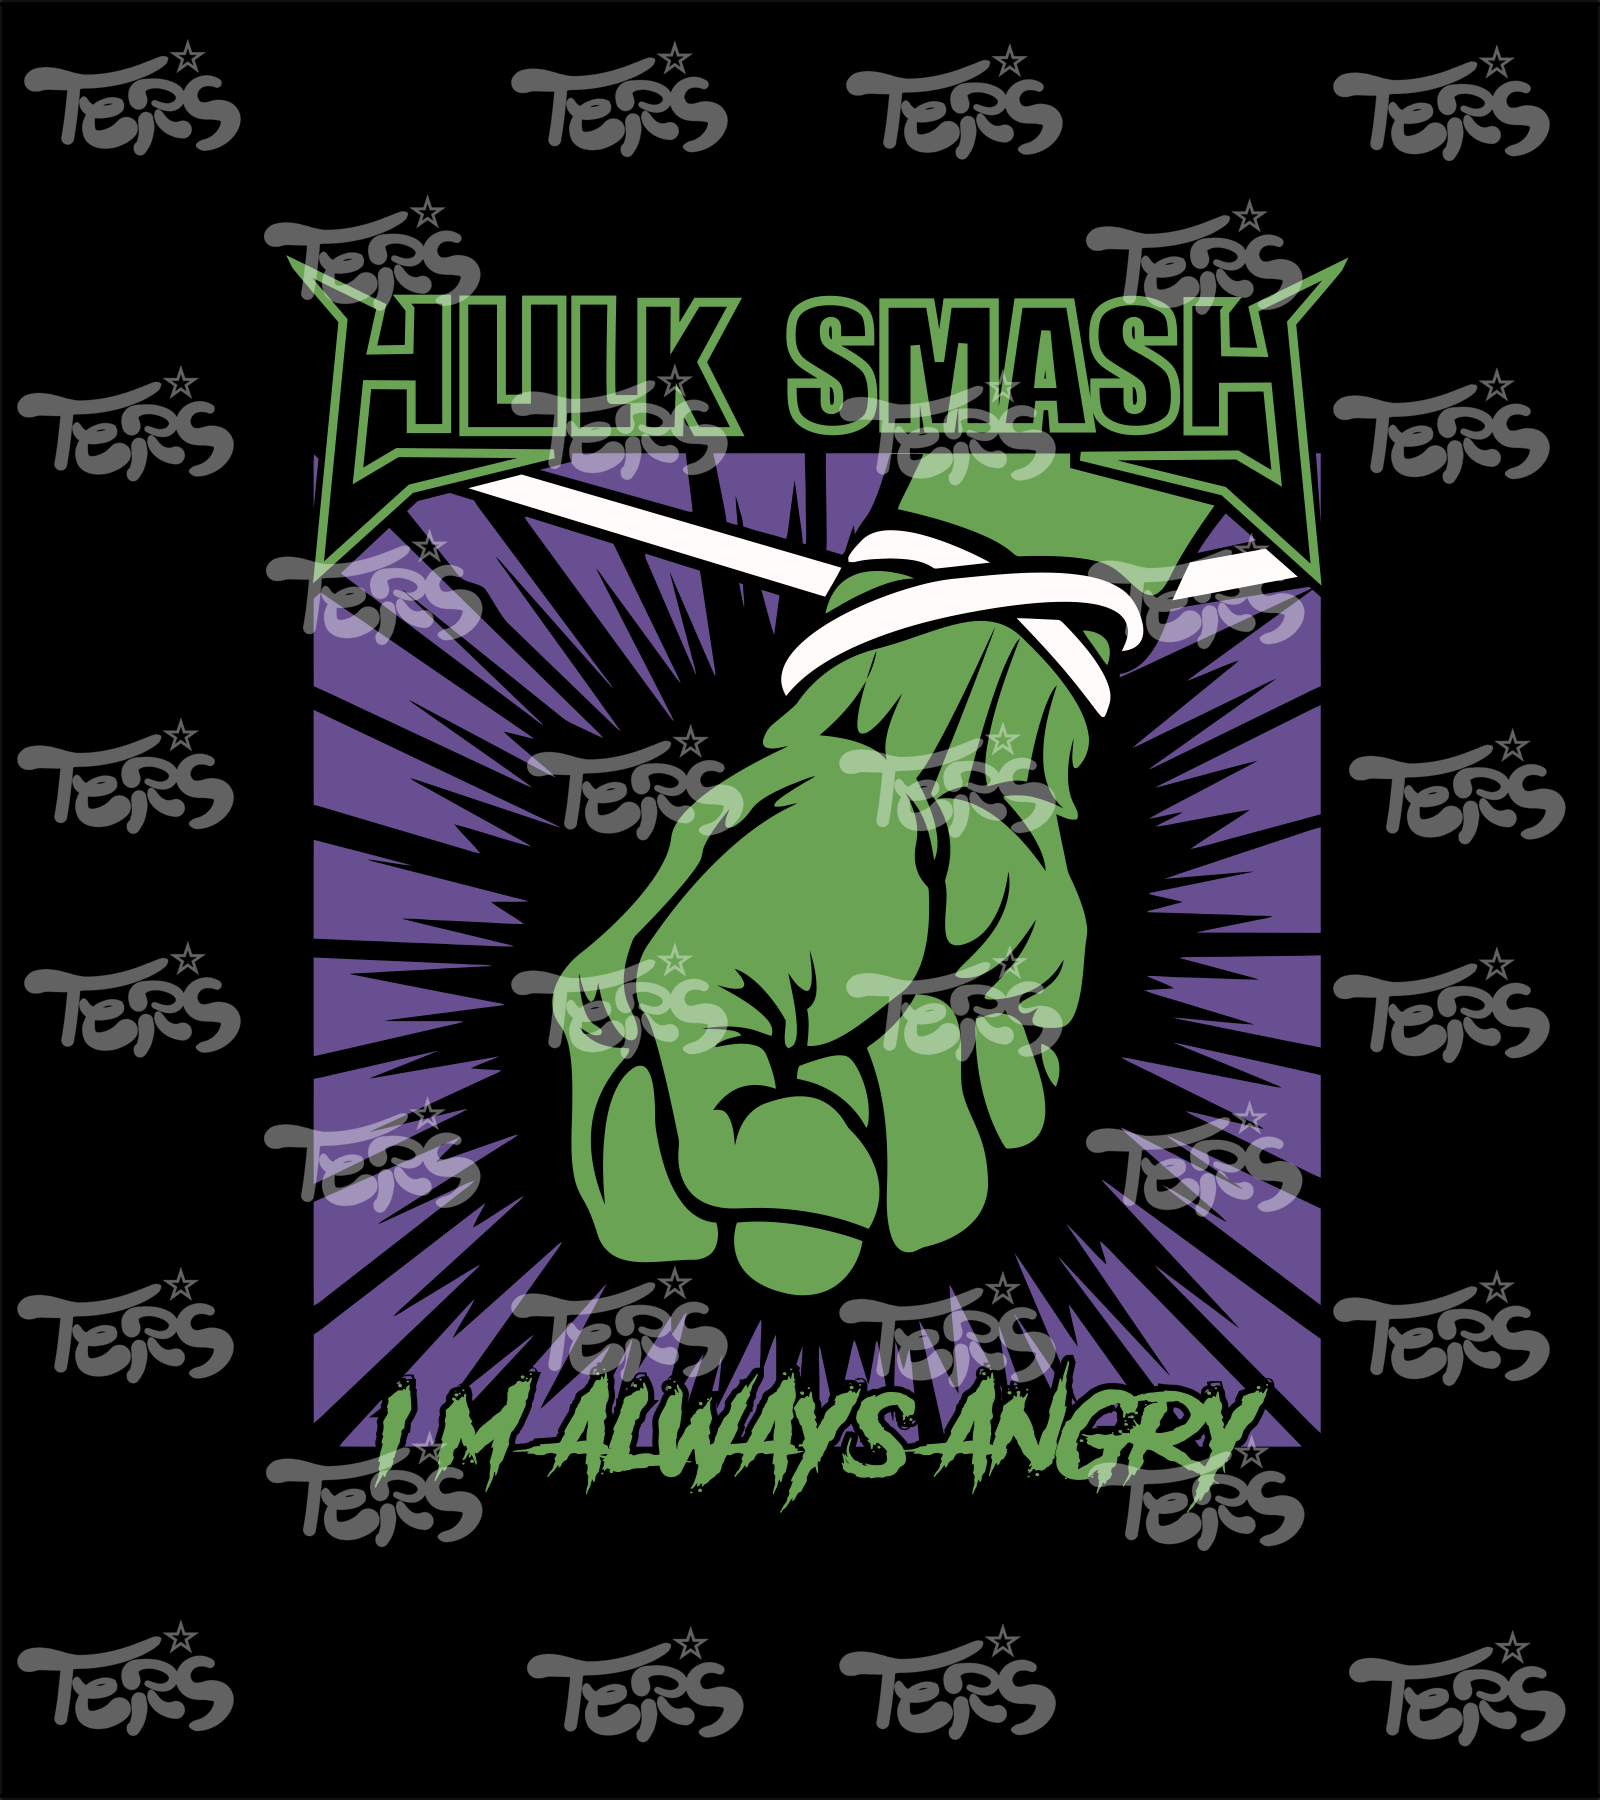 Mouse Pad Hulk Smash St Anger